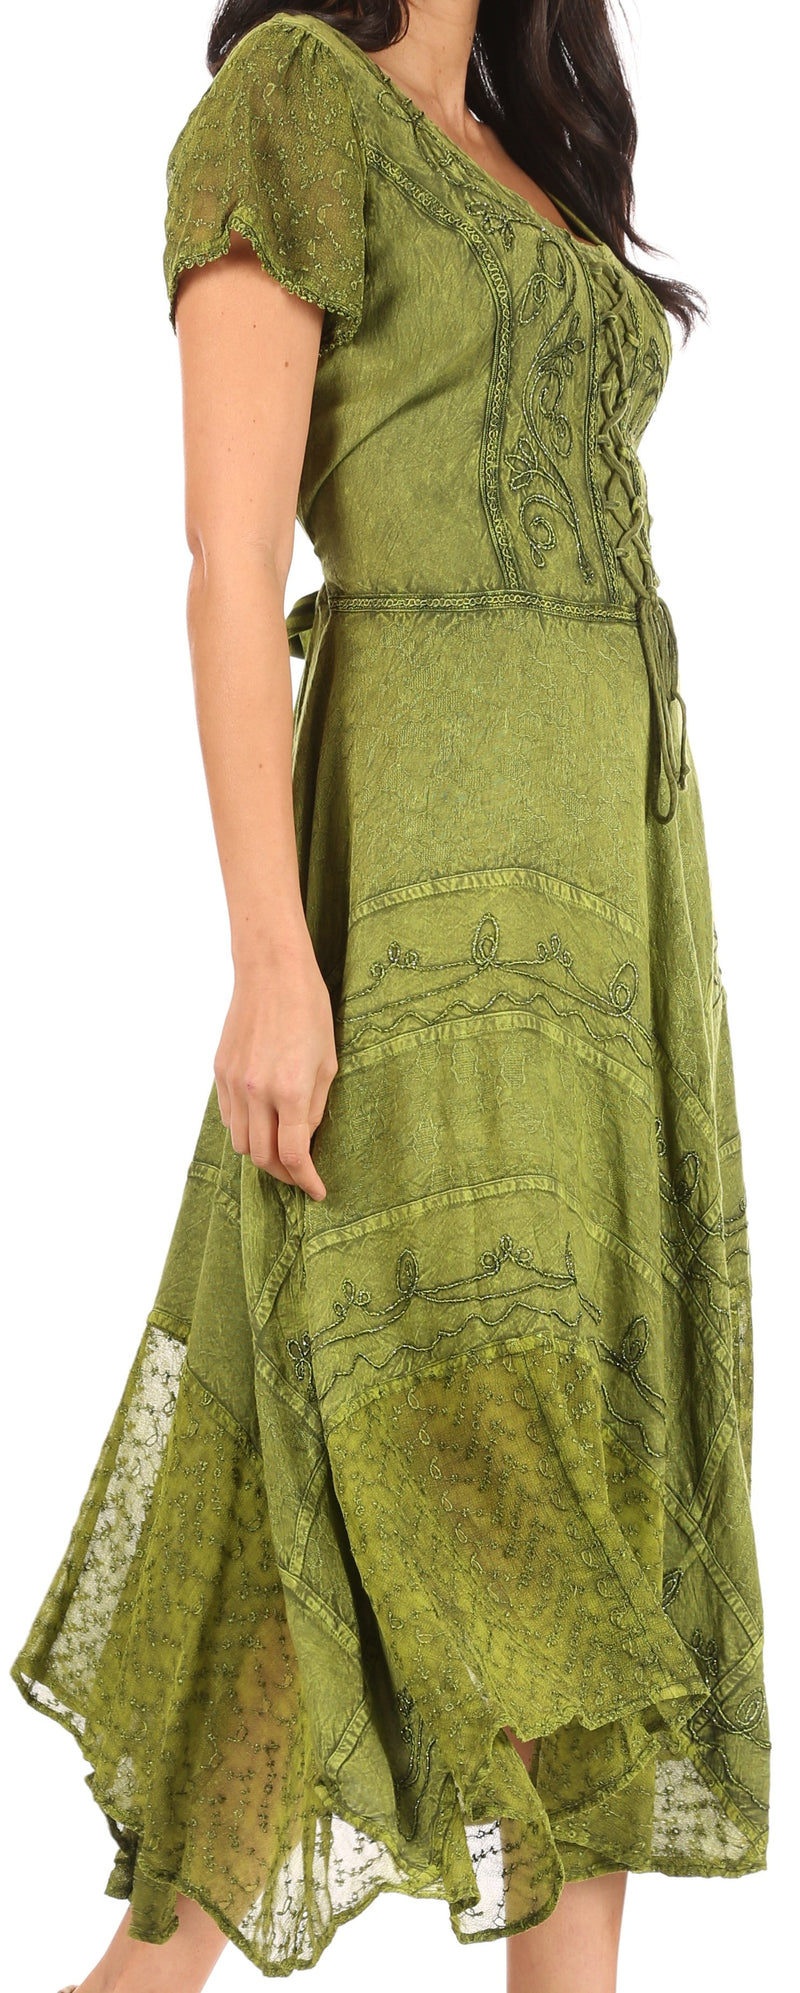 Sakkas Marigold Embroidered Fairy Dress